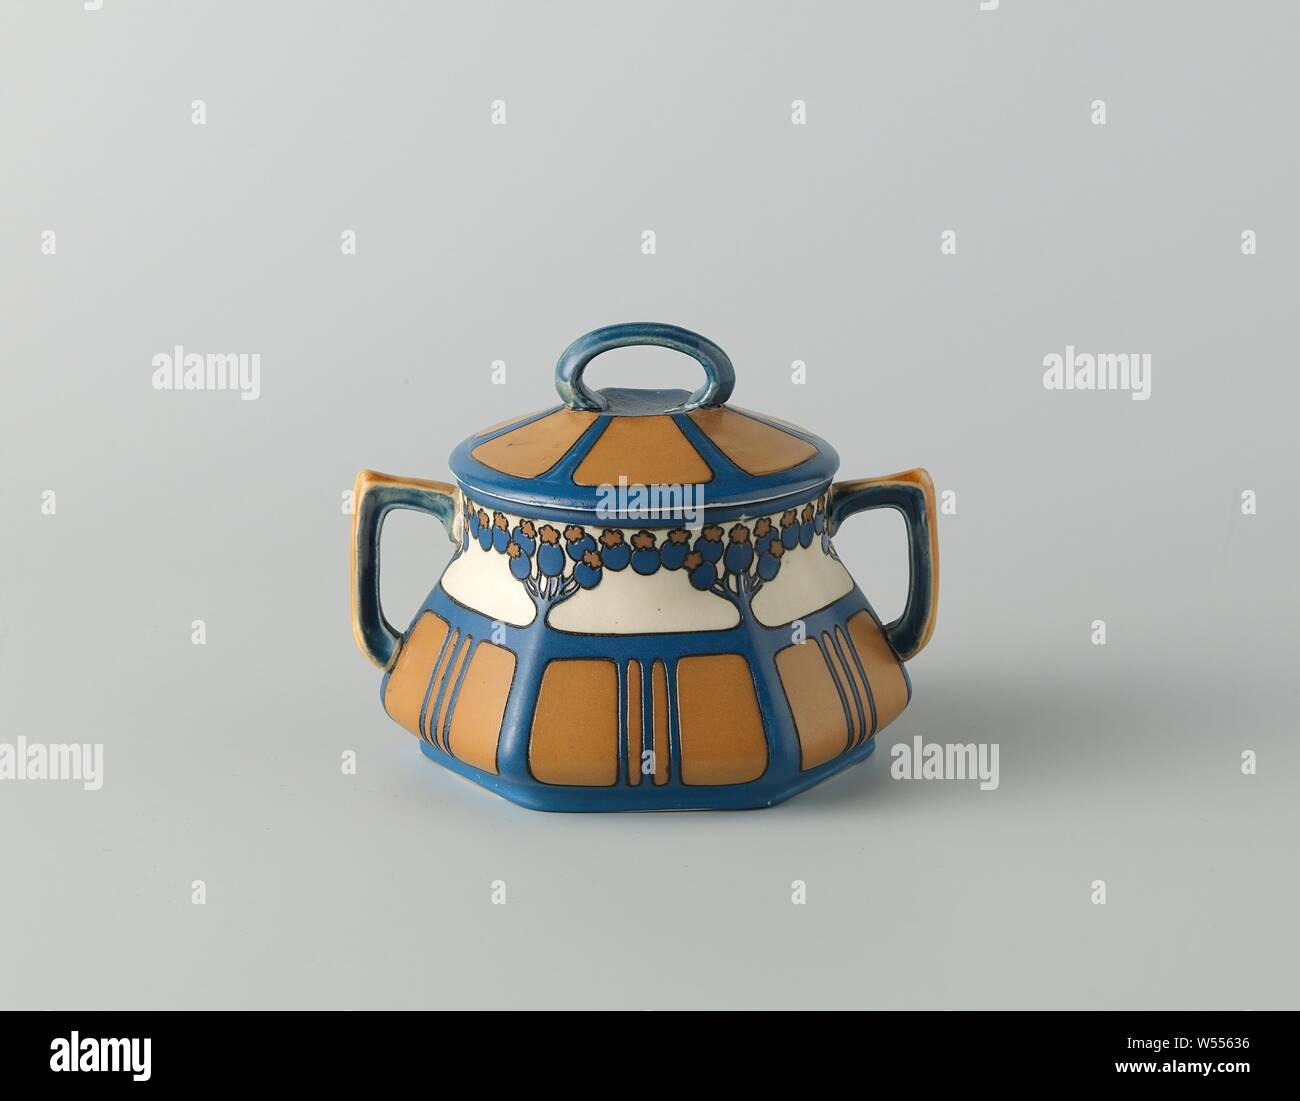 Sugar bowl lid, belonging to a tea set of chromolith stoneware, decorated in blue and tan, Villeroy & Boch Keramische Werke K.G., Mettlach, c. 1911 - c. 1912, stoneware, h 4.3 cm × d 8.5 cm Stock Photo